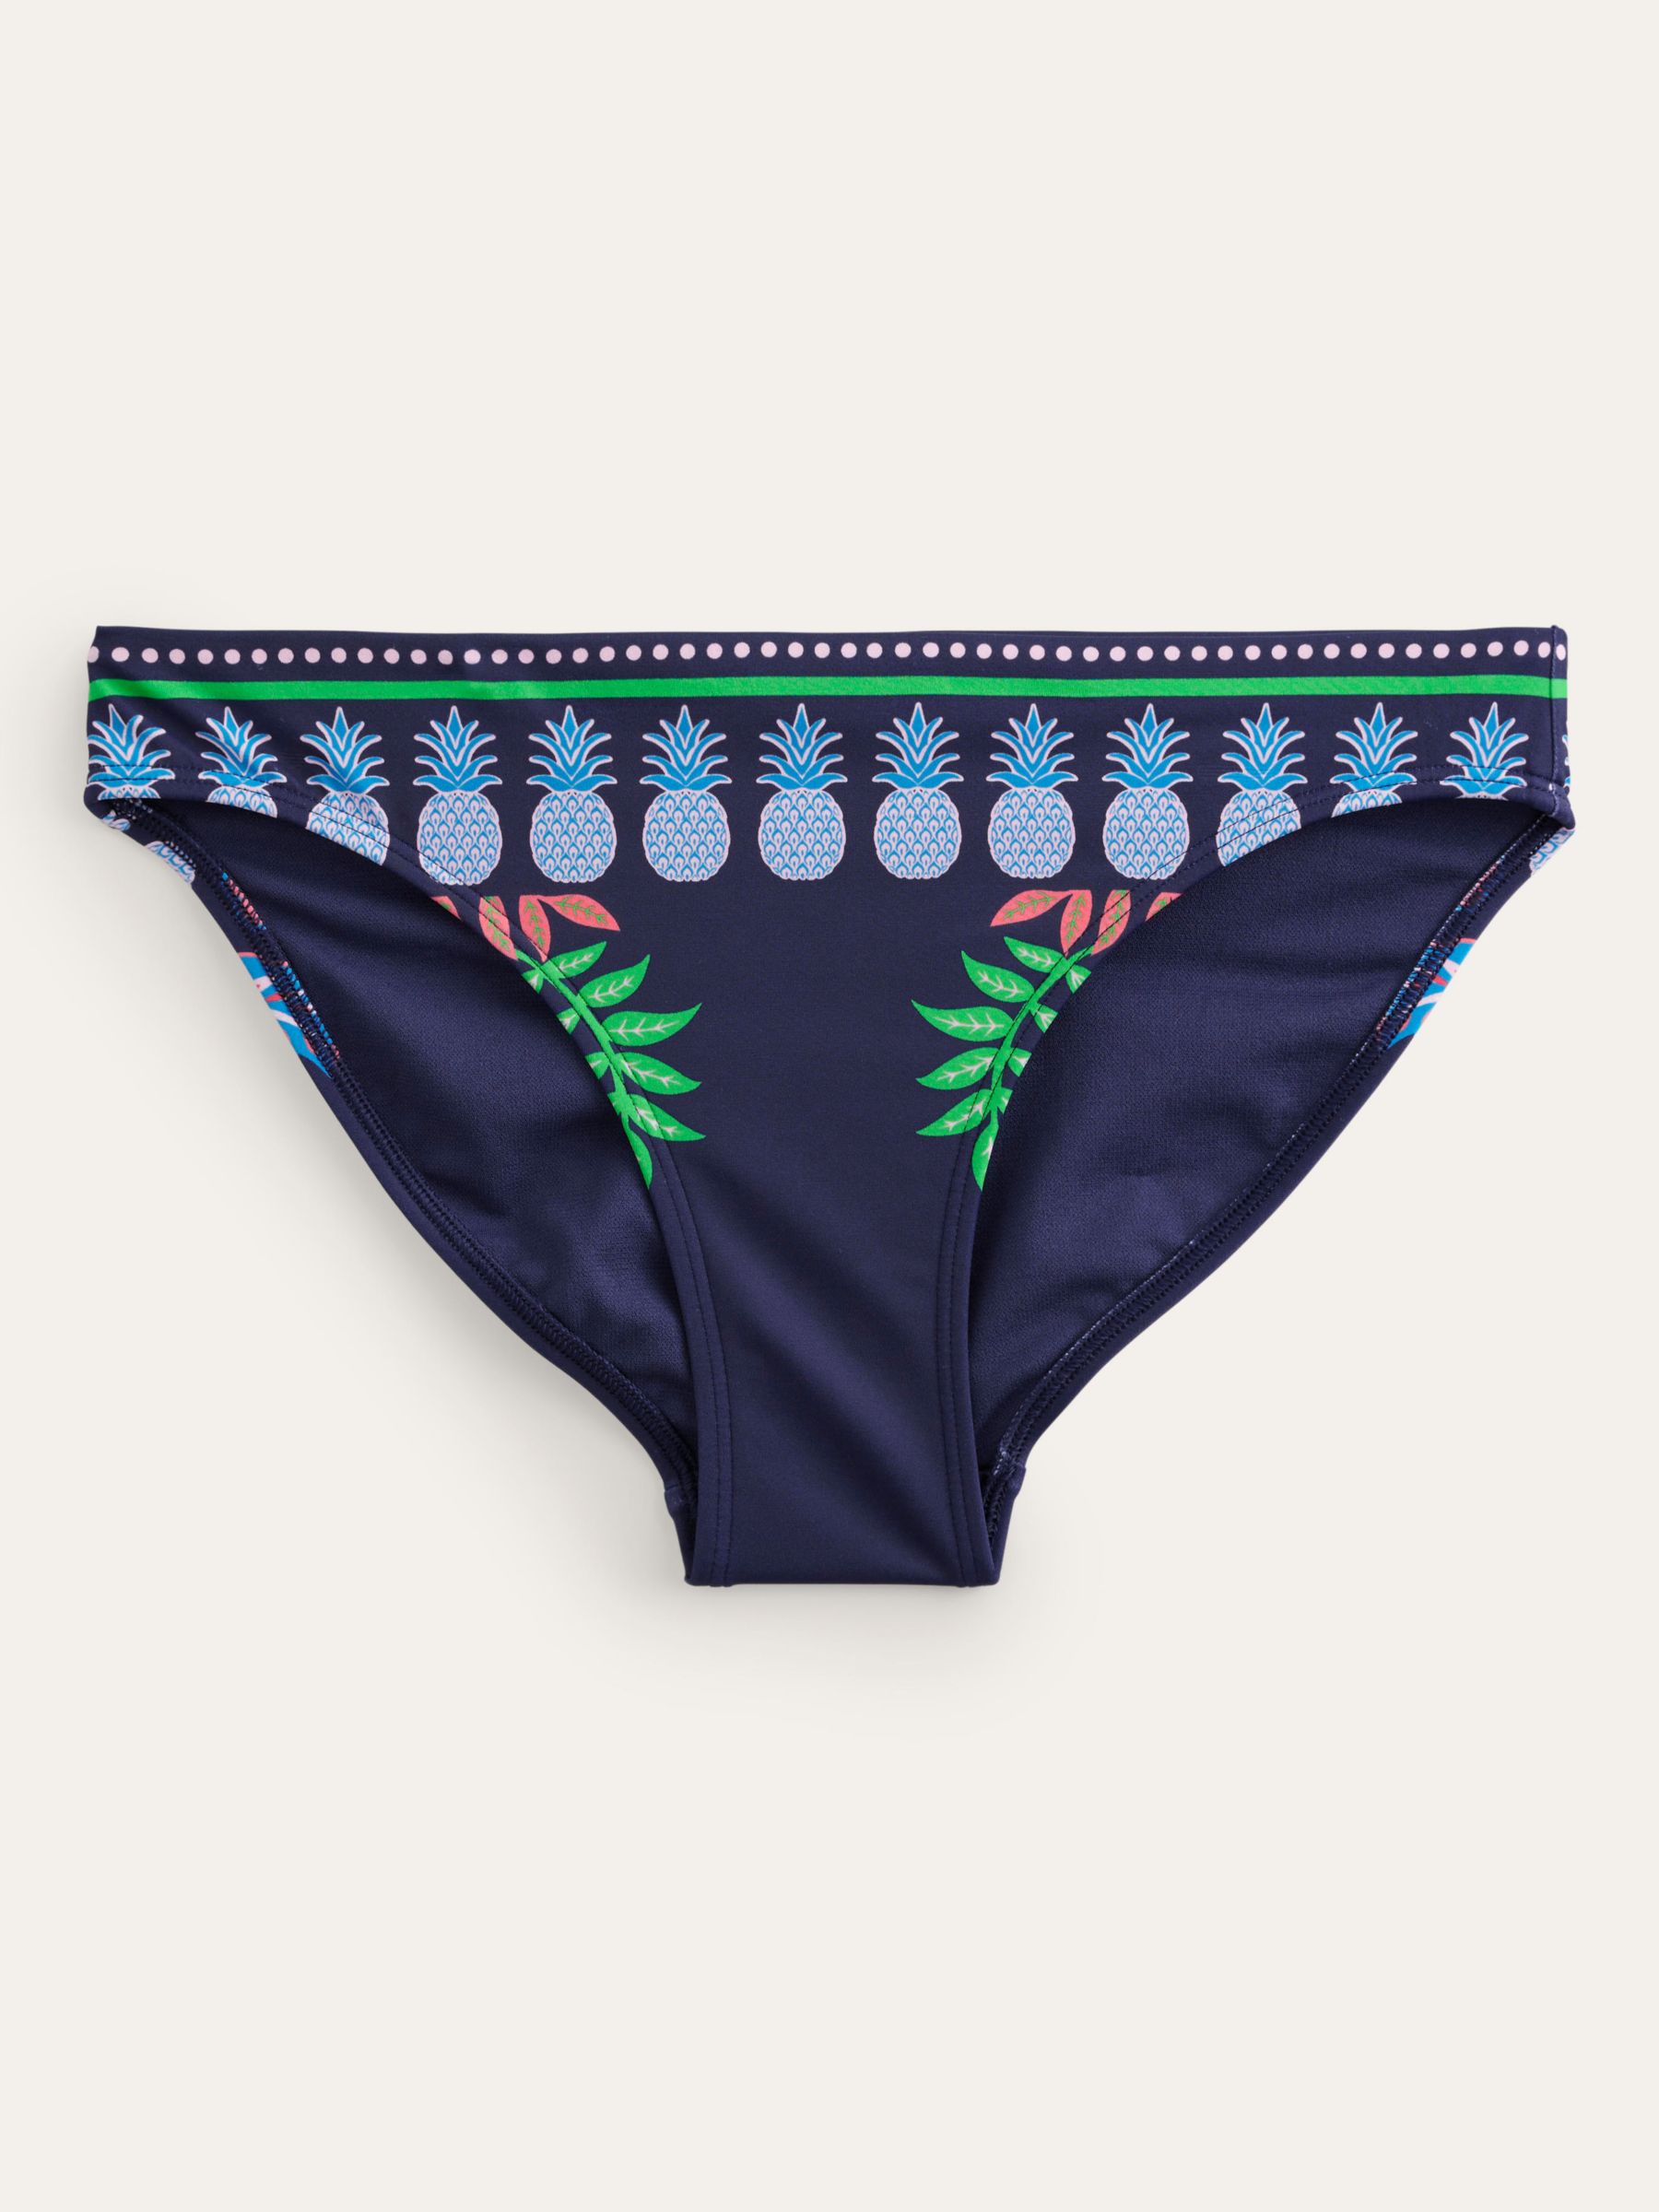 Boden Classic Tropic Bikini Bottoms, French Navy, 8